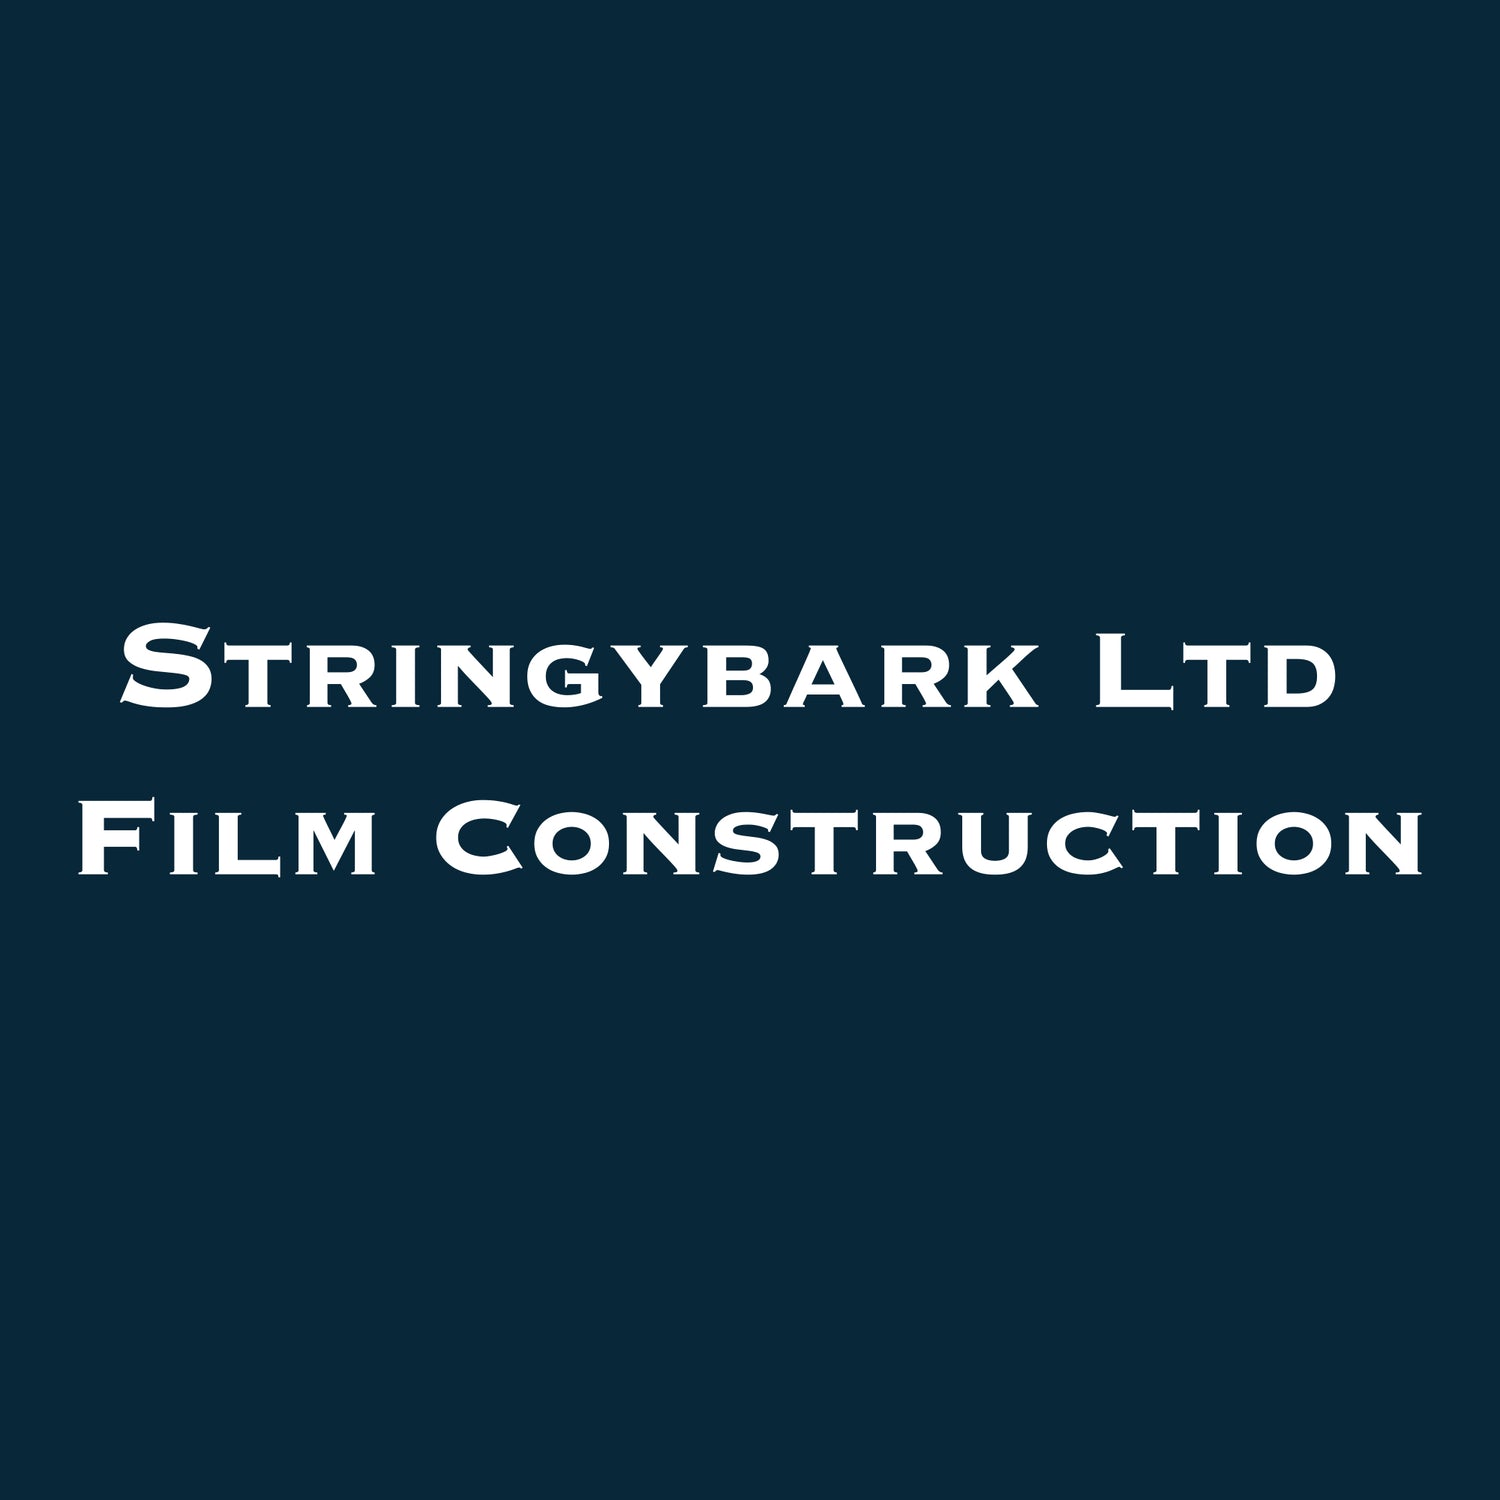 Stringybark Ltd Film Construction